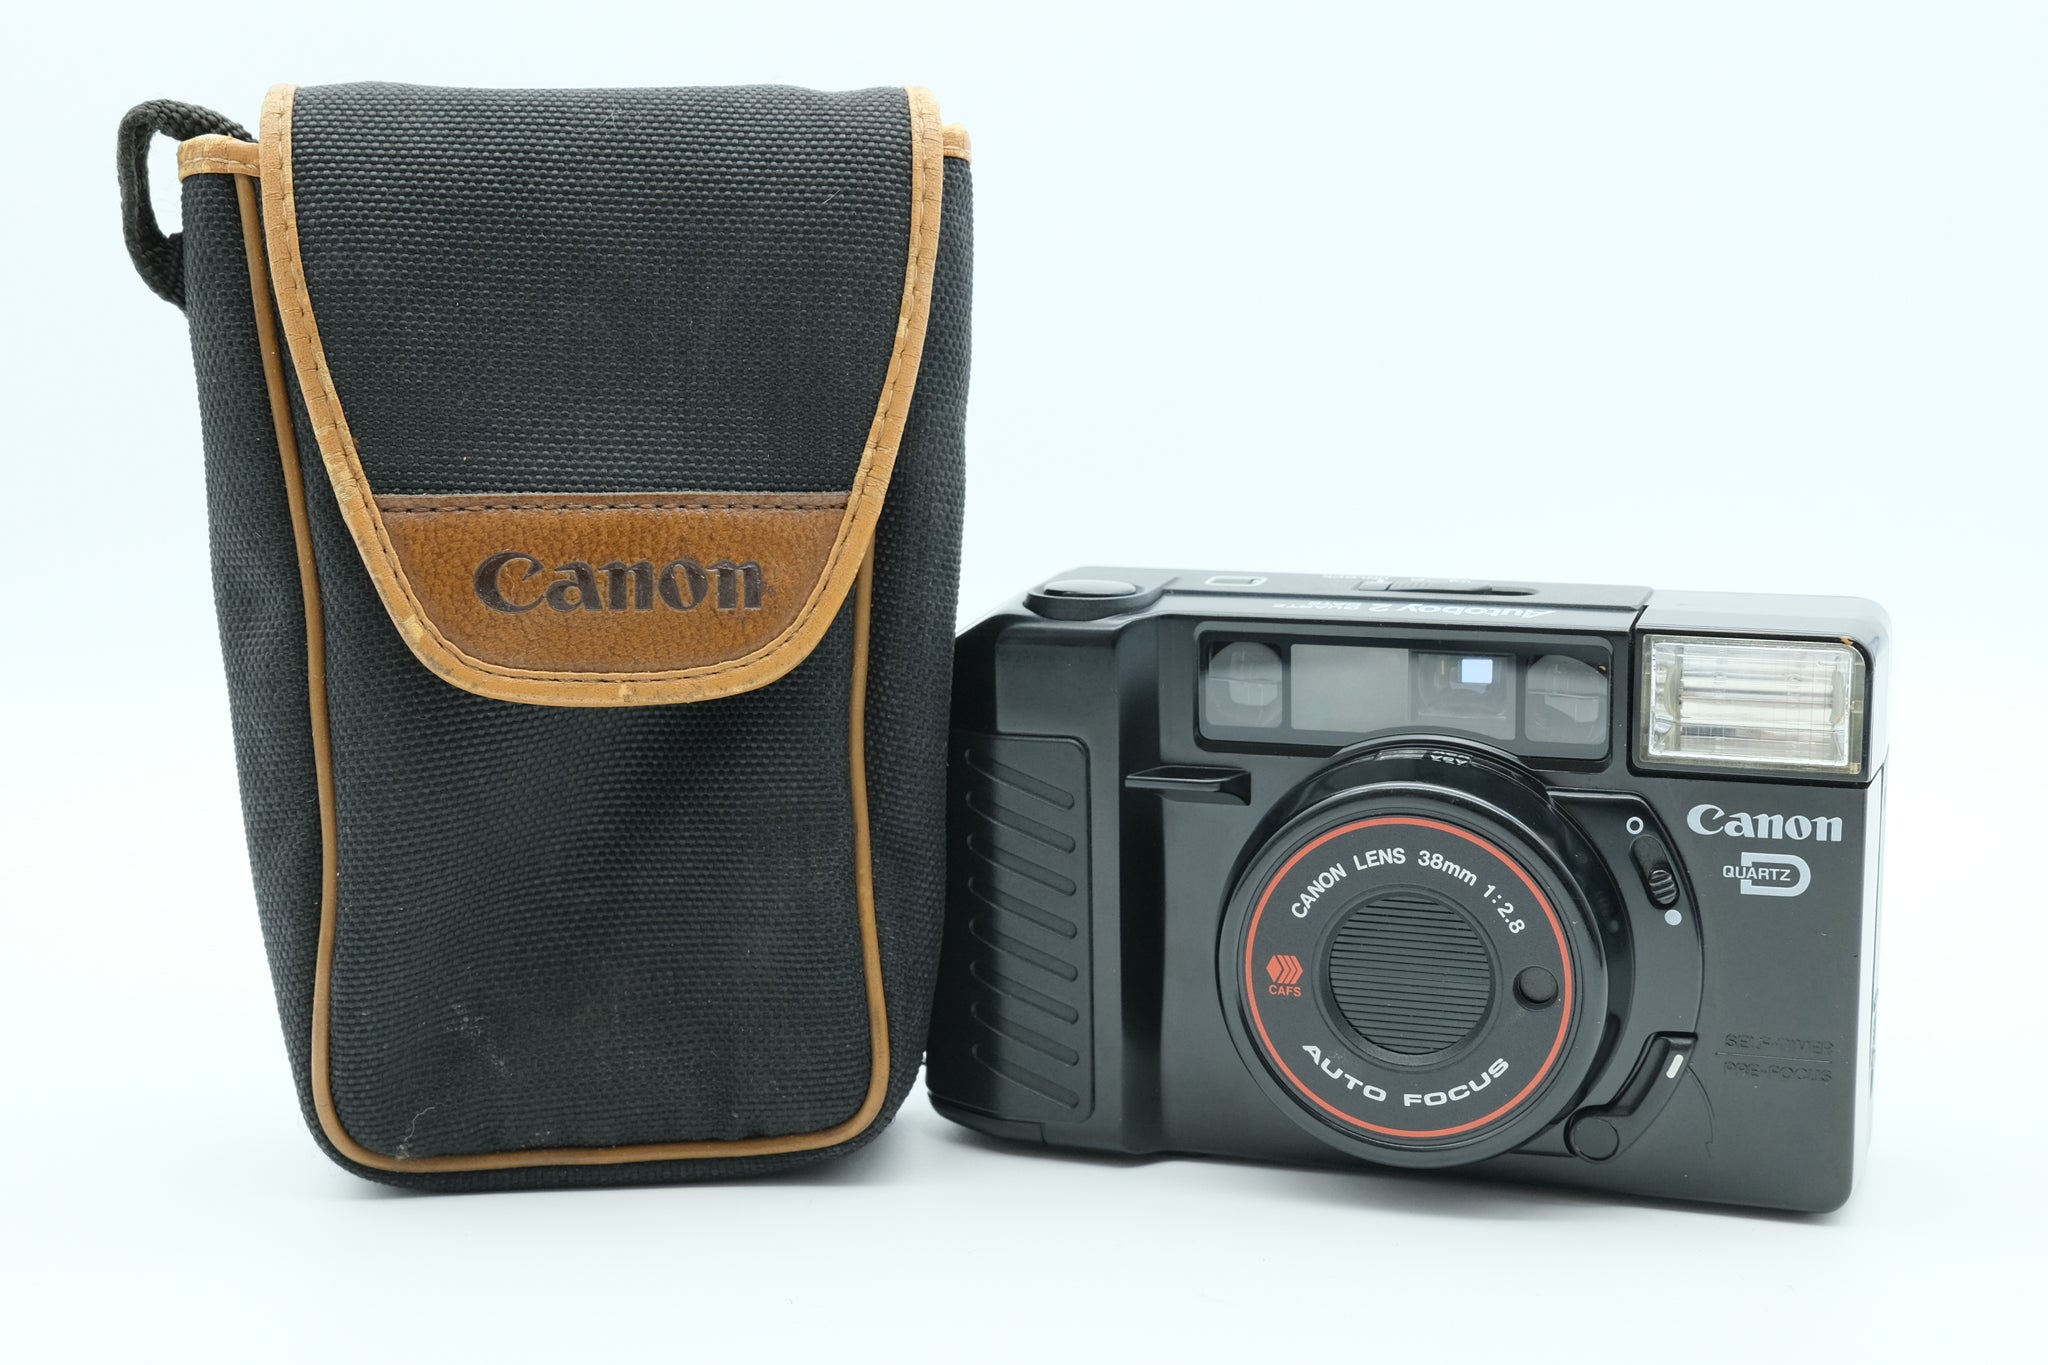 Canon Autoboy 2 QD - Serial 2803278 - Excellent Cond